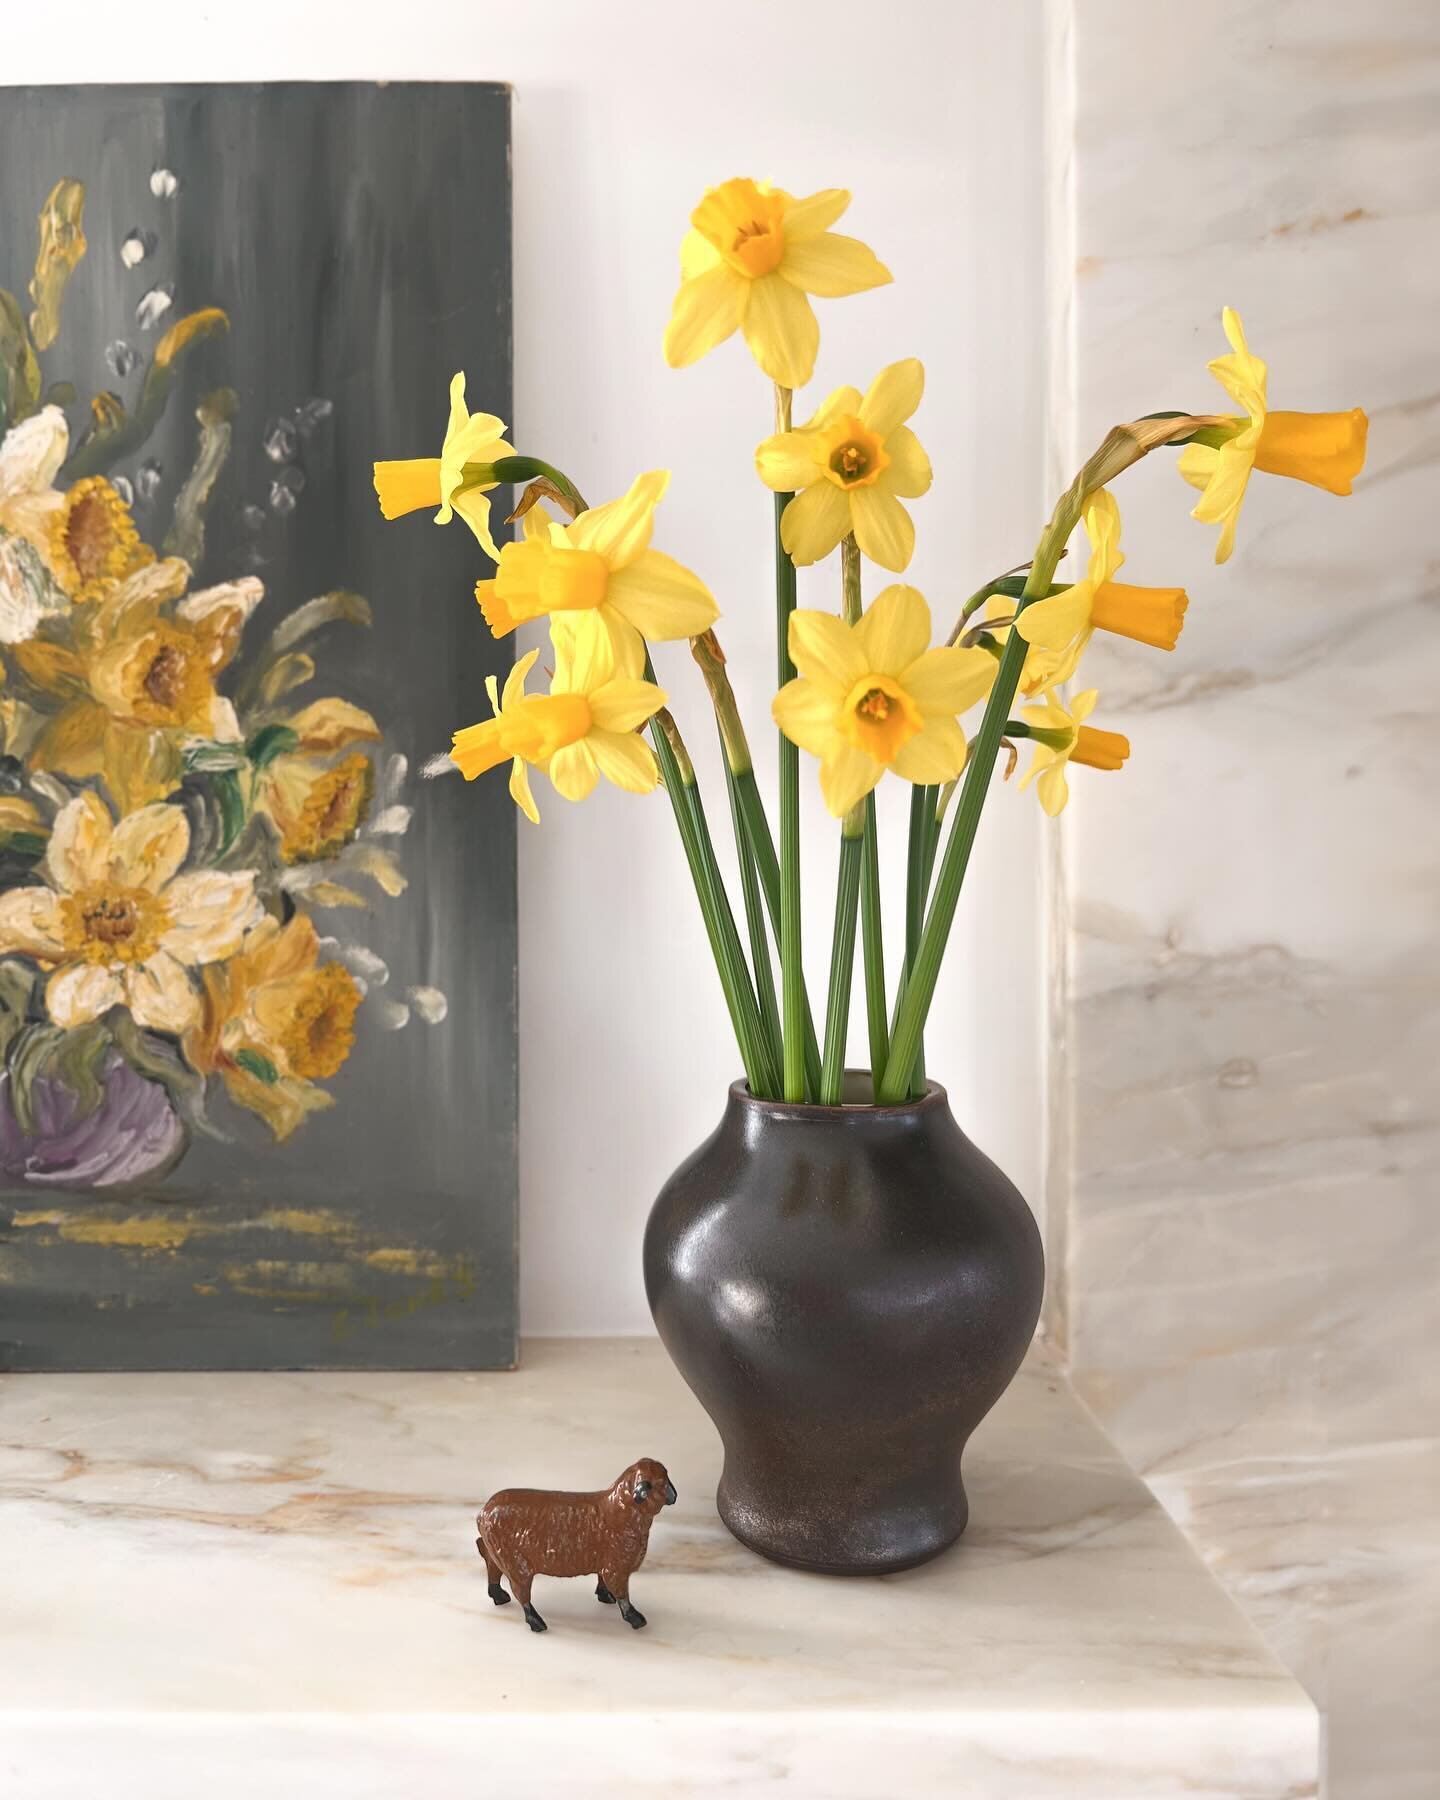 Spring ting 🐑 Pots at home @flowerchildfloral and @kbbrgr 

&mdash;&mdash;&mdash;
#ceramics #wheelthrownpottery #florist #interiordesign